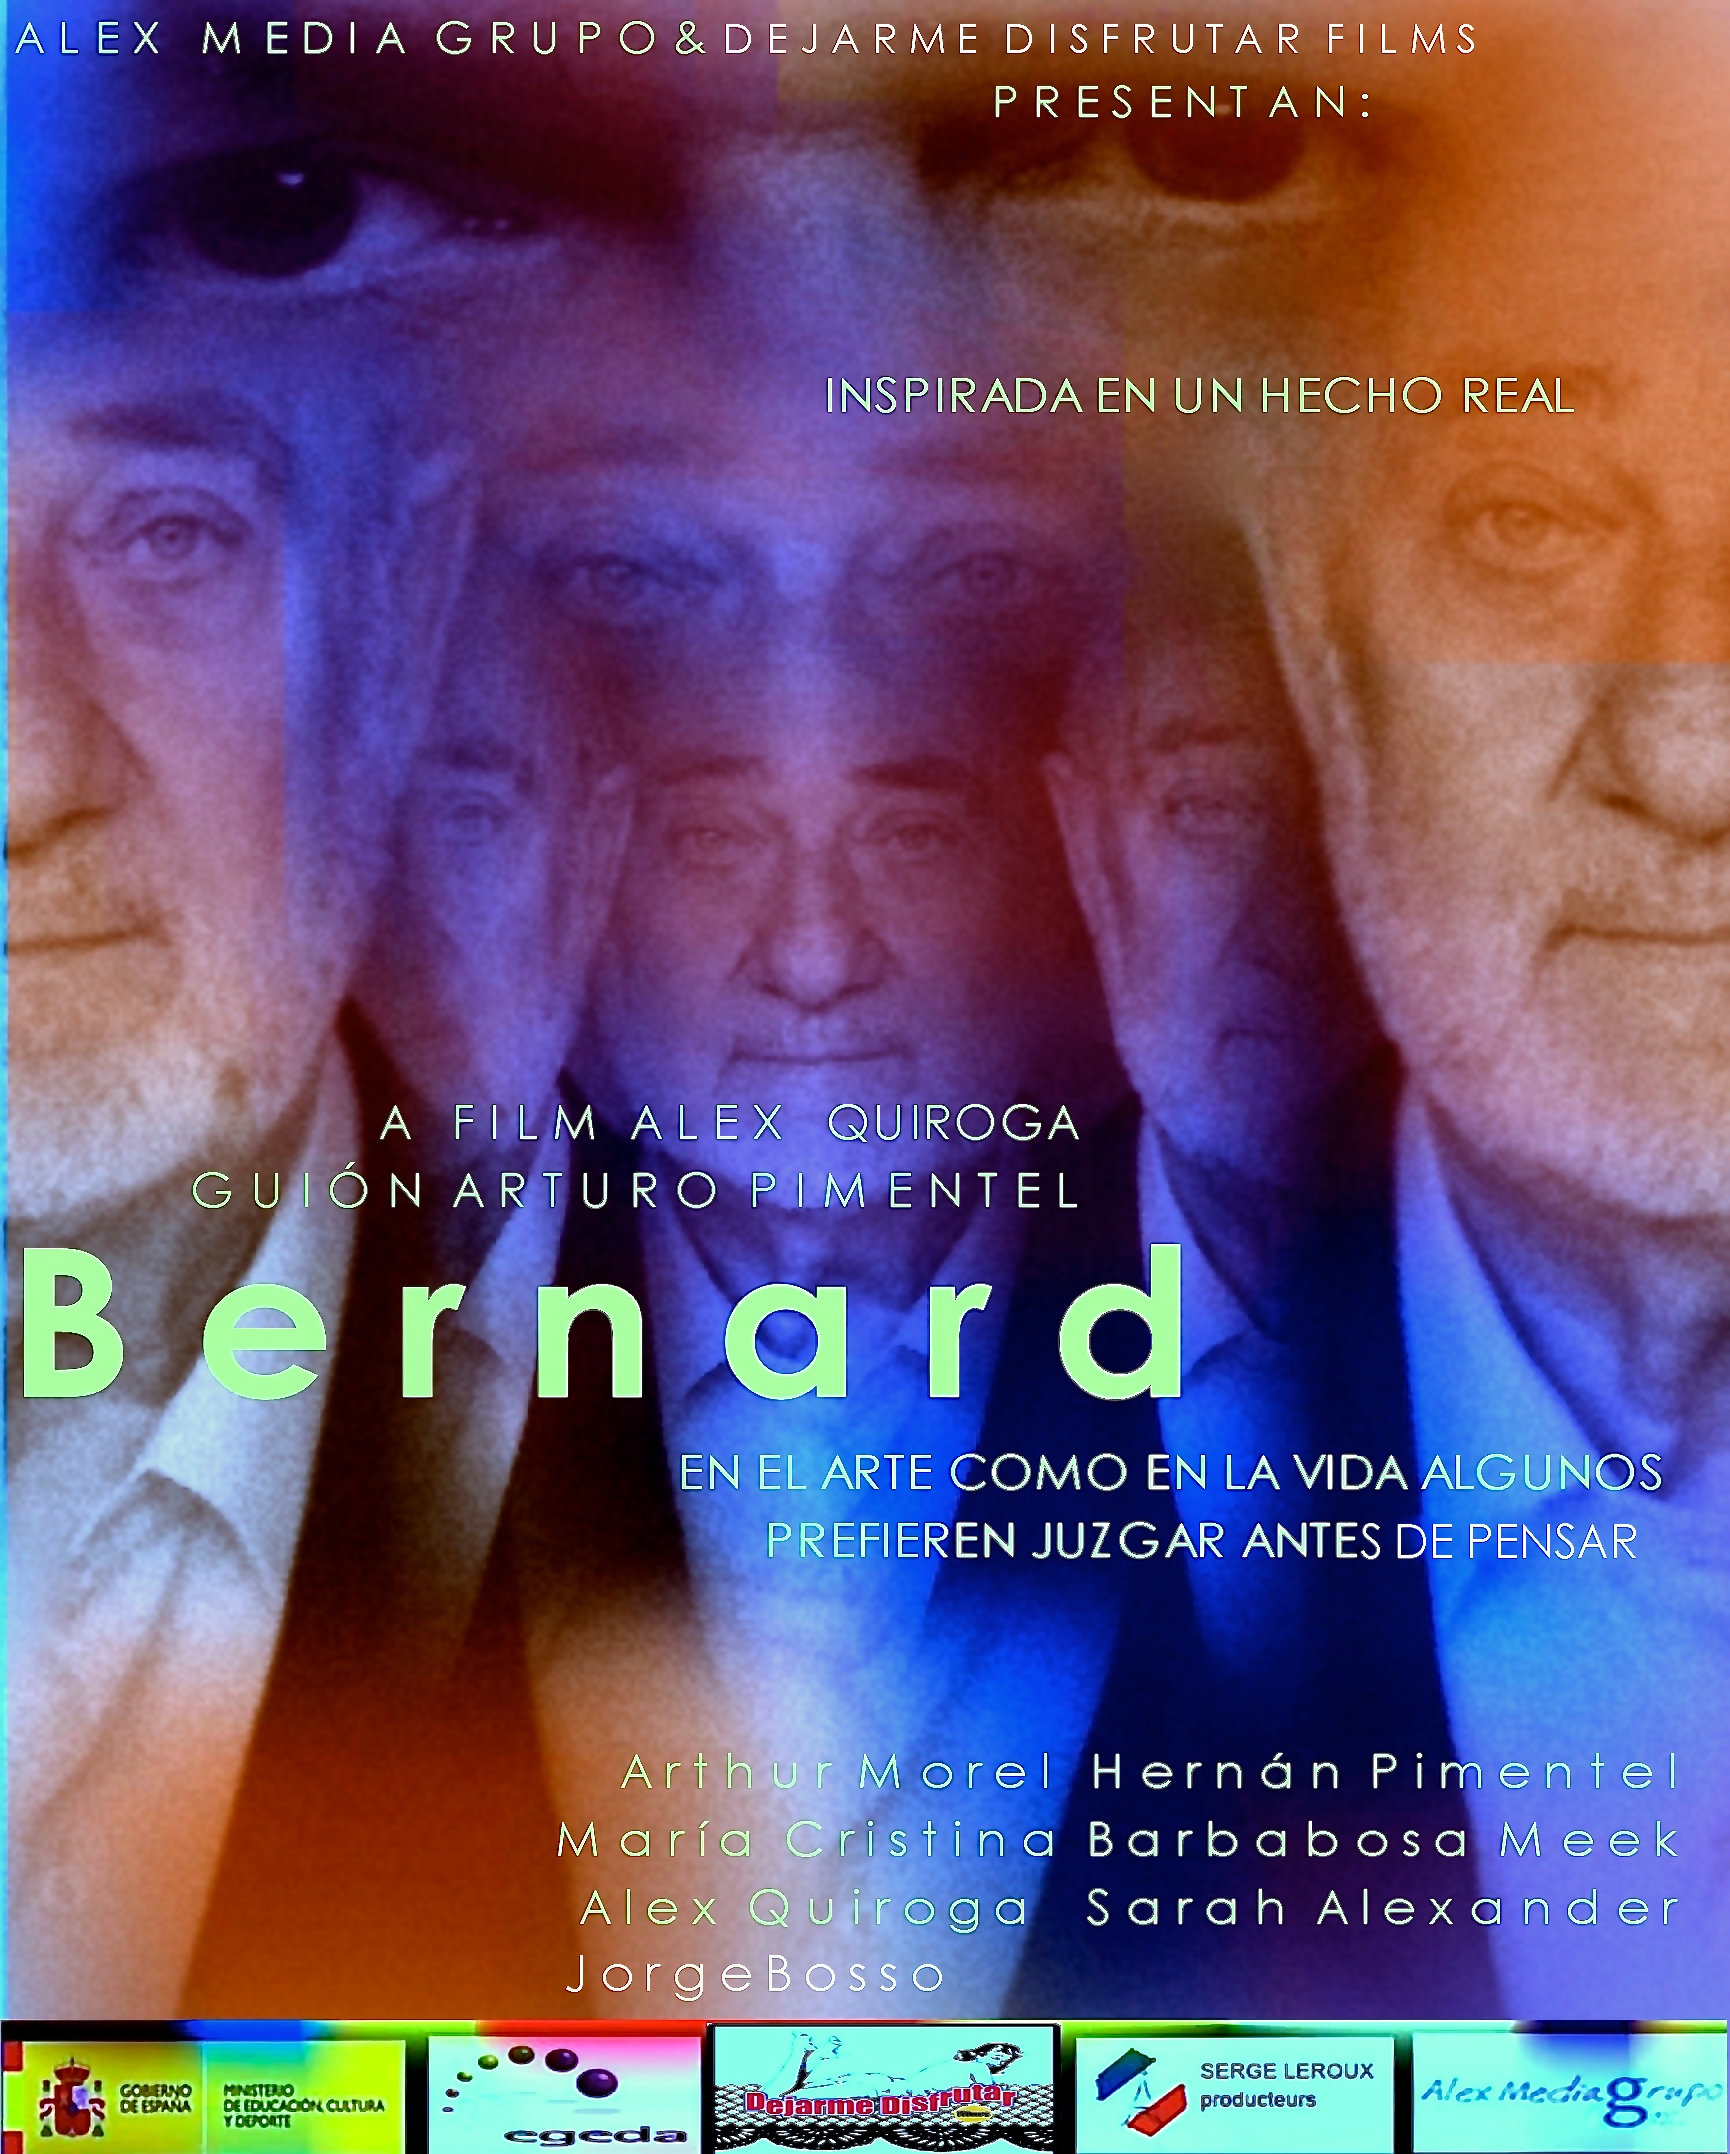 BERNARd a film Alex Quiroga